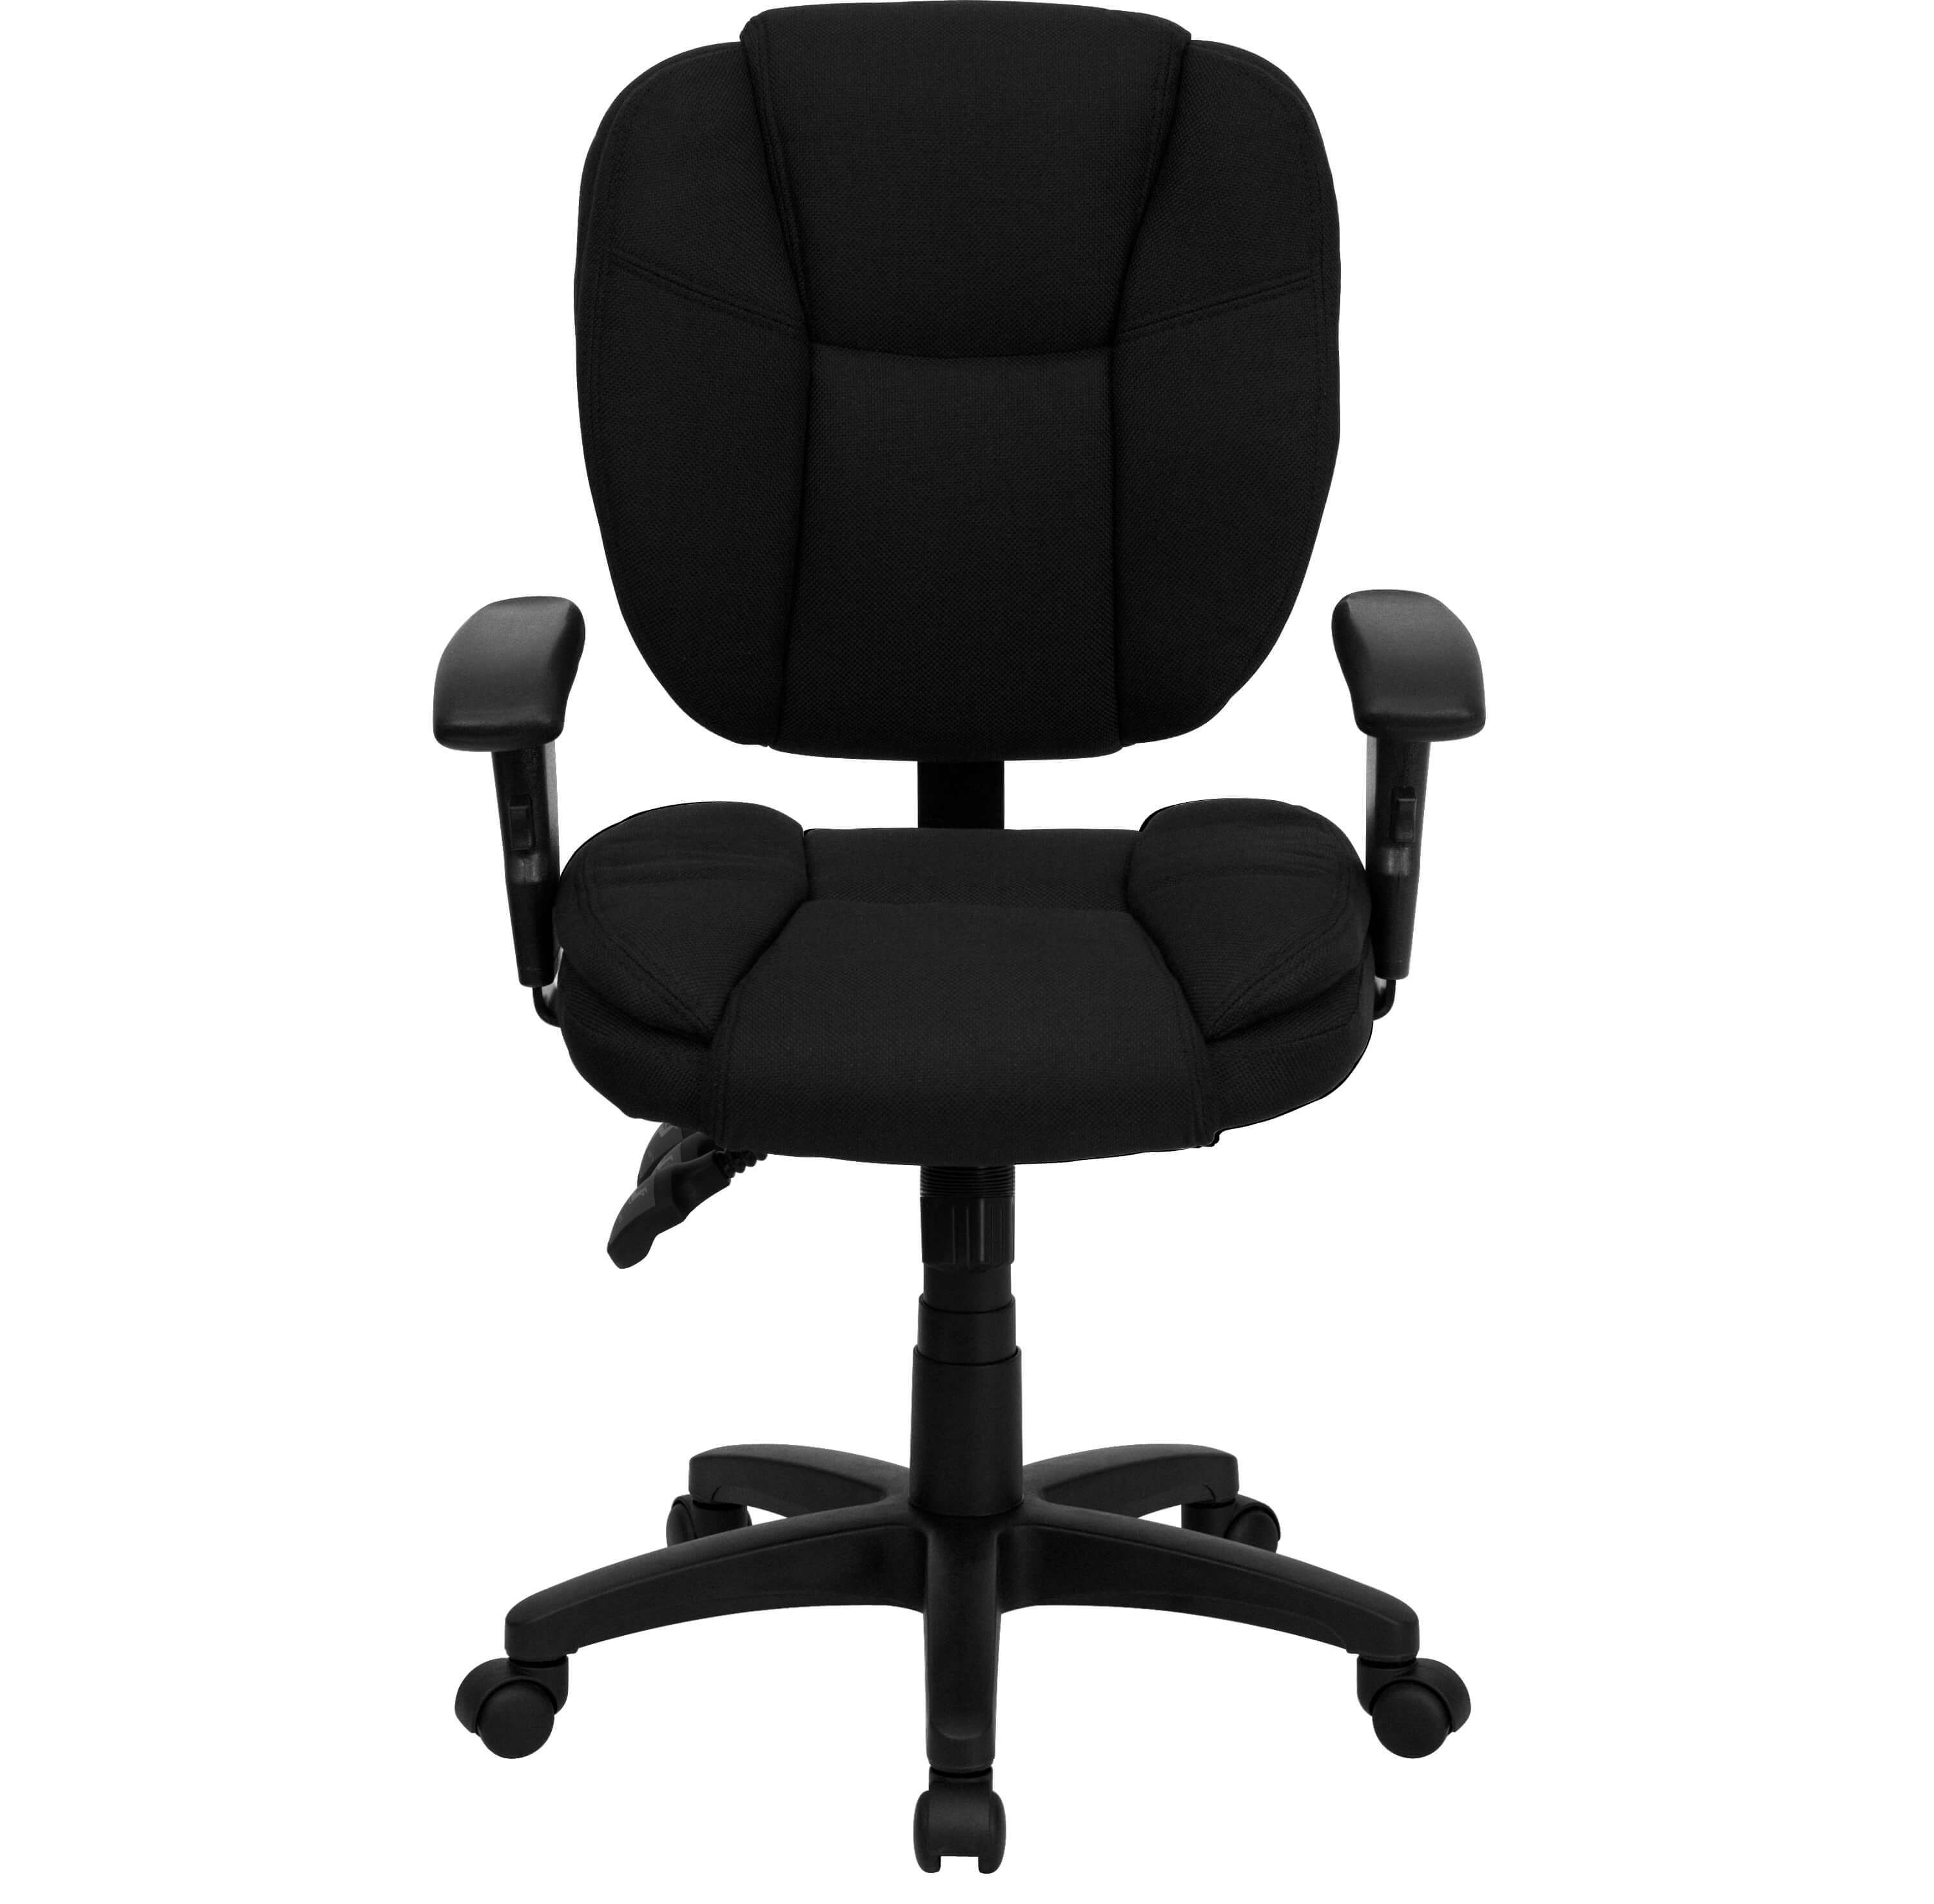 Cool desk chairs CUB GO 930F BK ARMS GG FLA